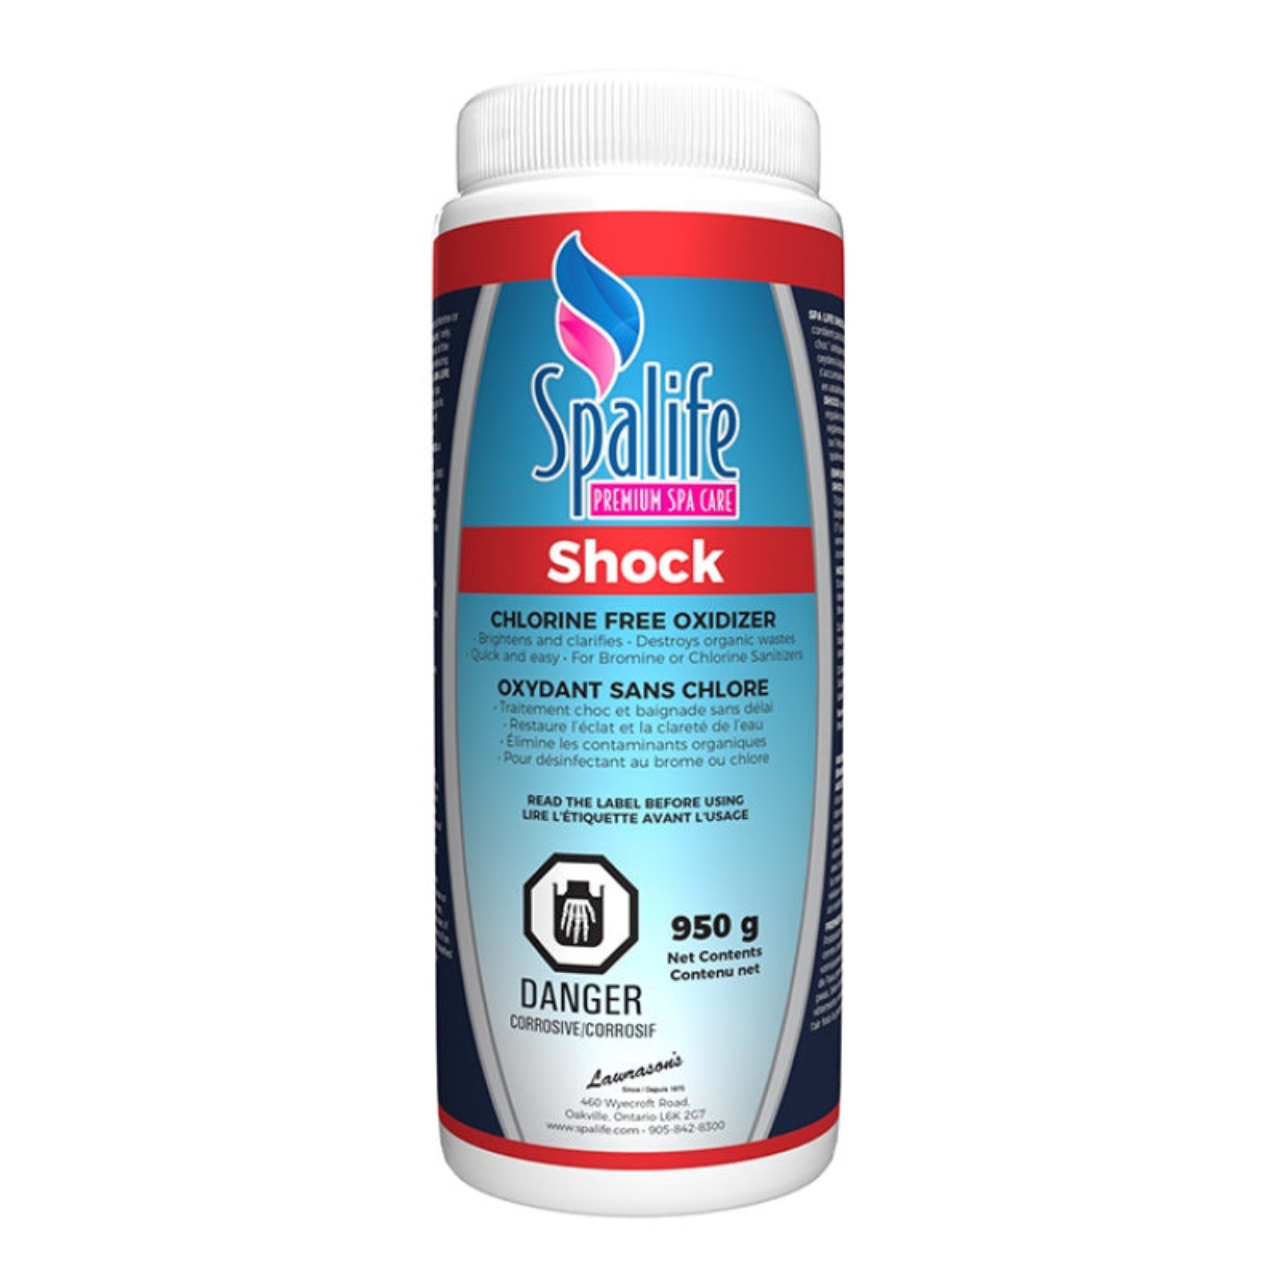 Spa Life Shock - Chlorine Free Oxidizer